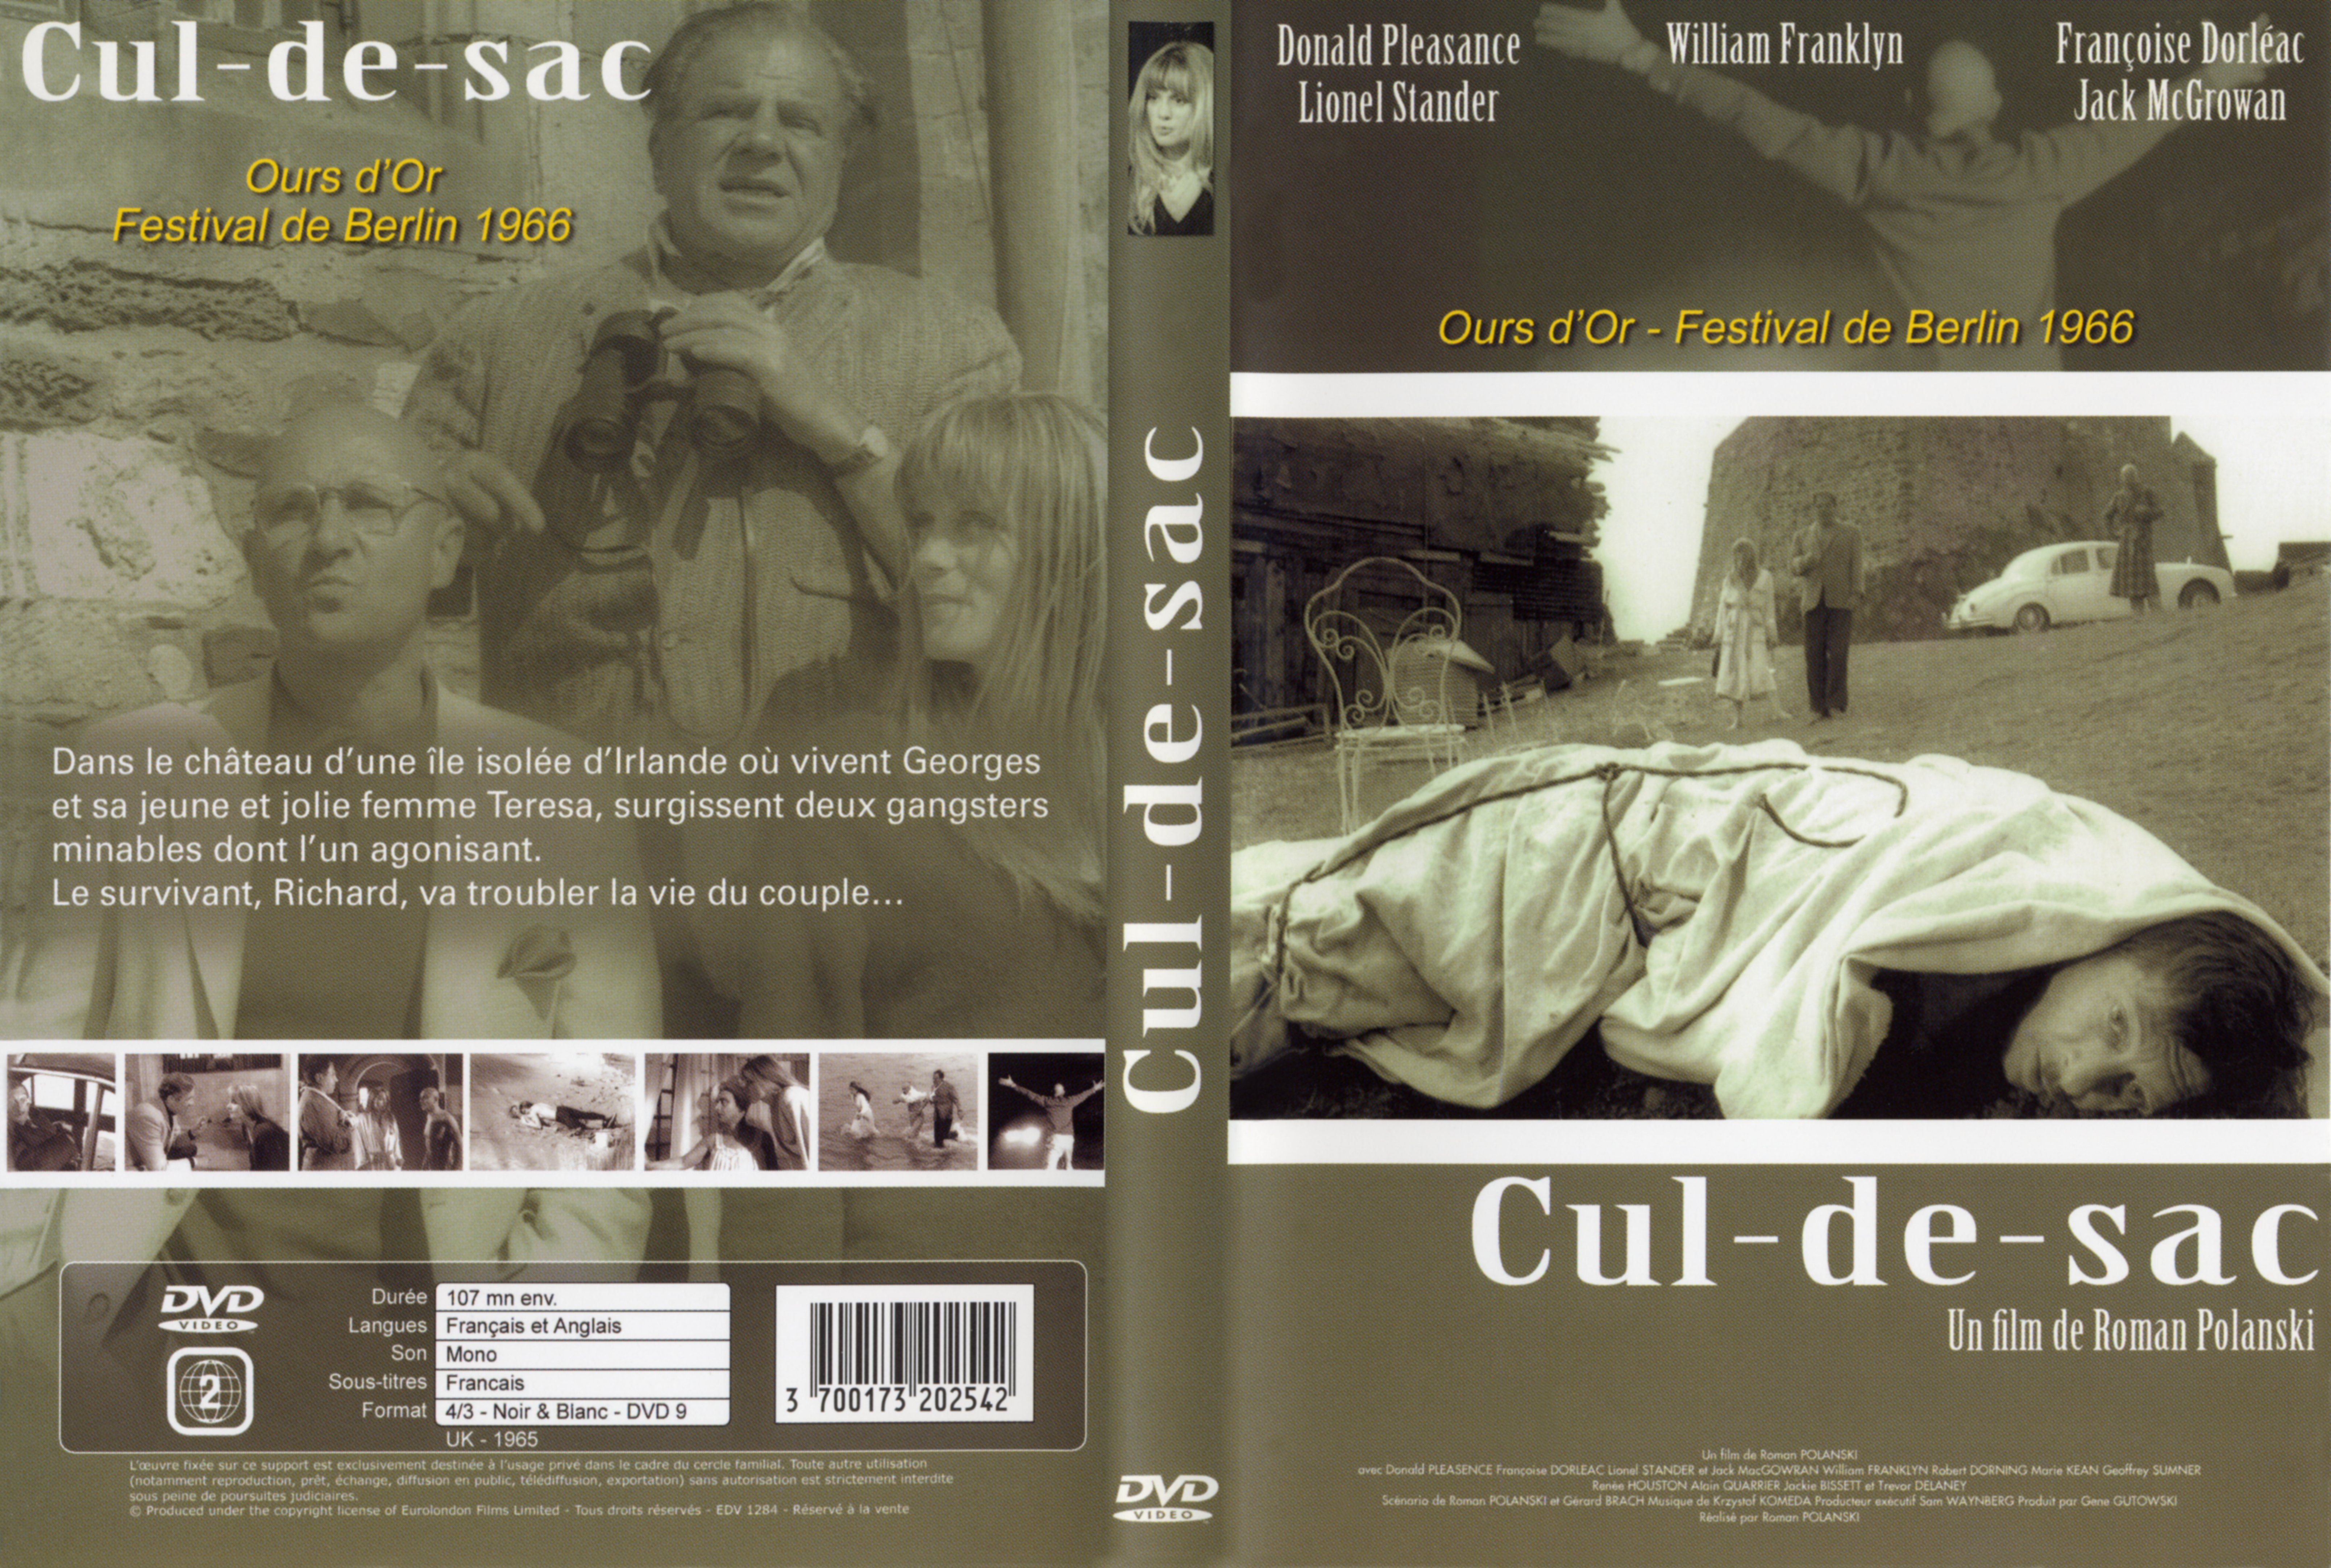 Jaquette DVD Cul-de-sac